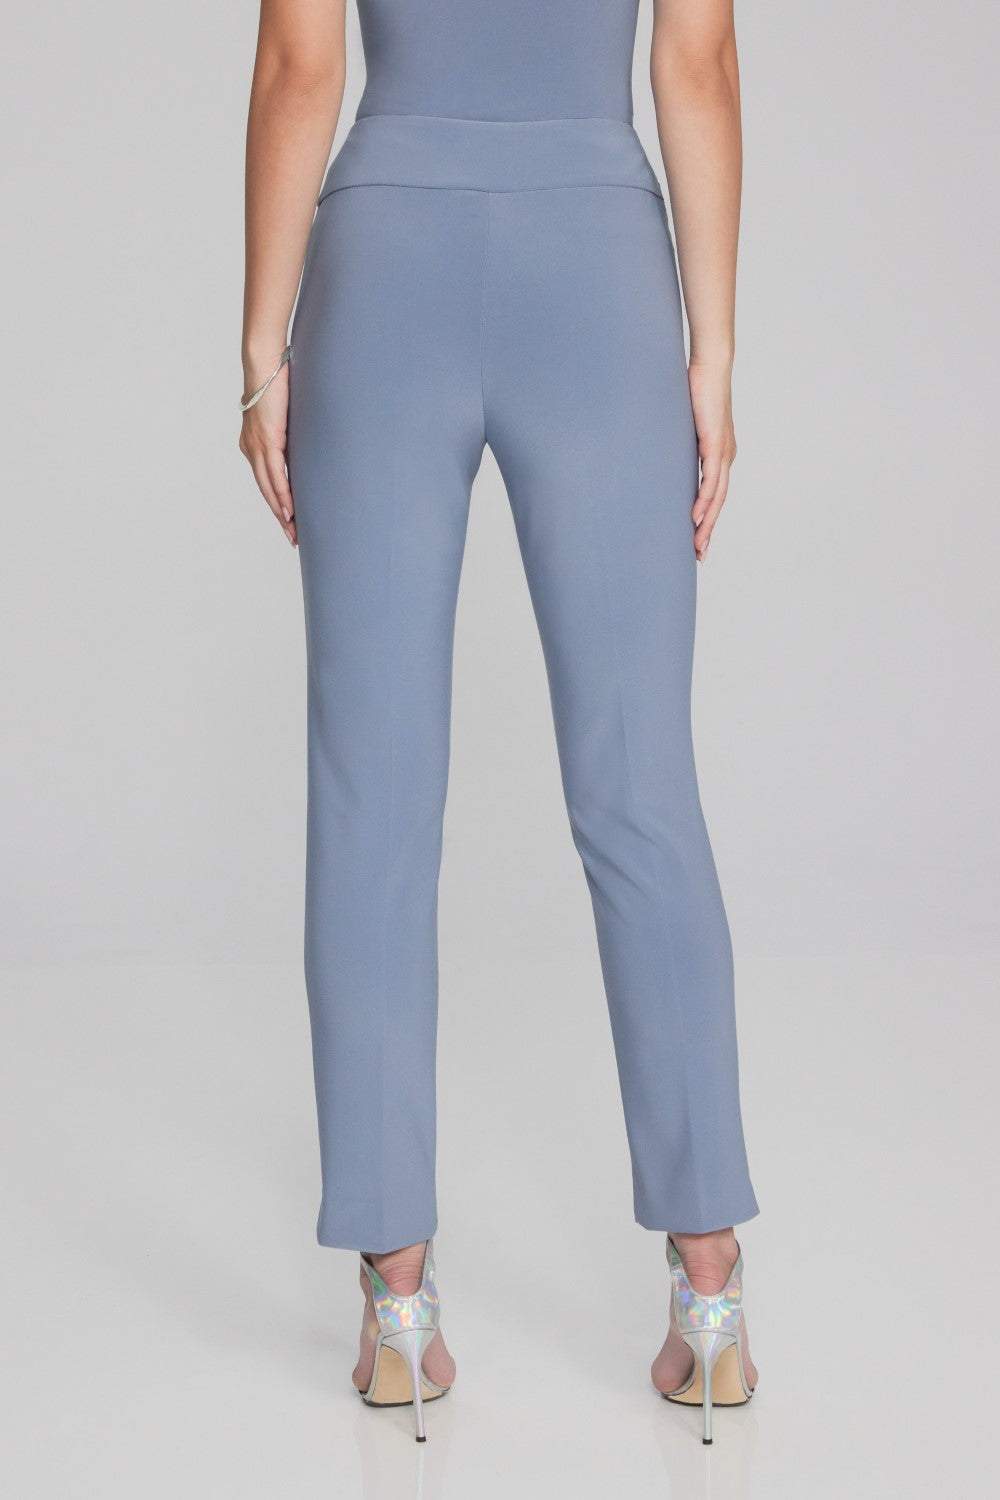 Pantaloni Joseph Ribkoff 144092S24-SB Serenity Blu